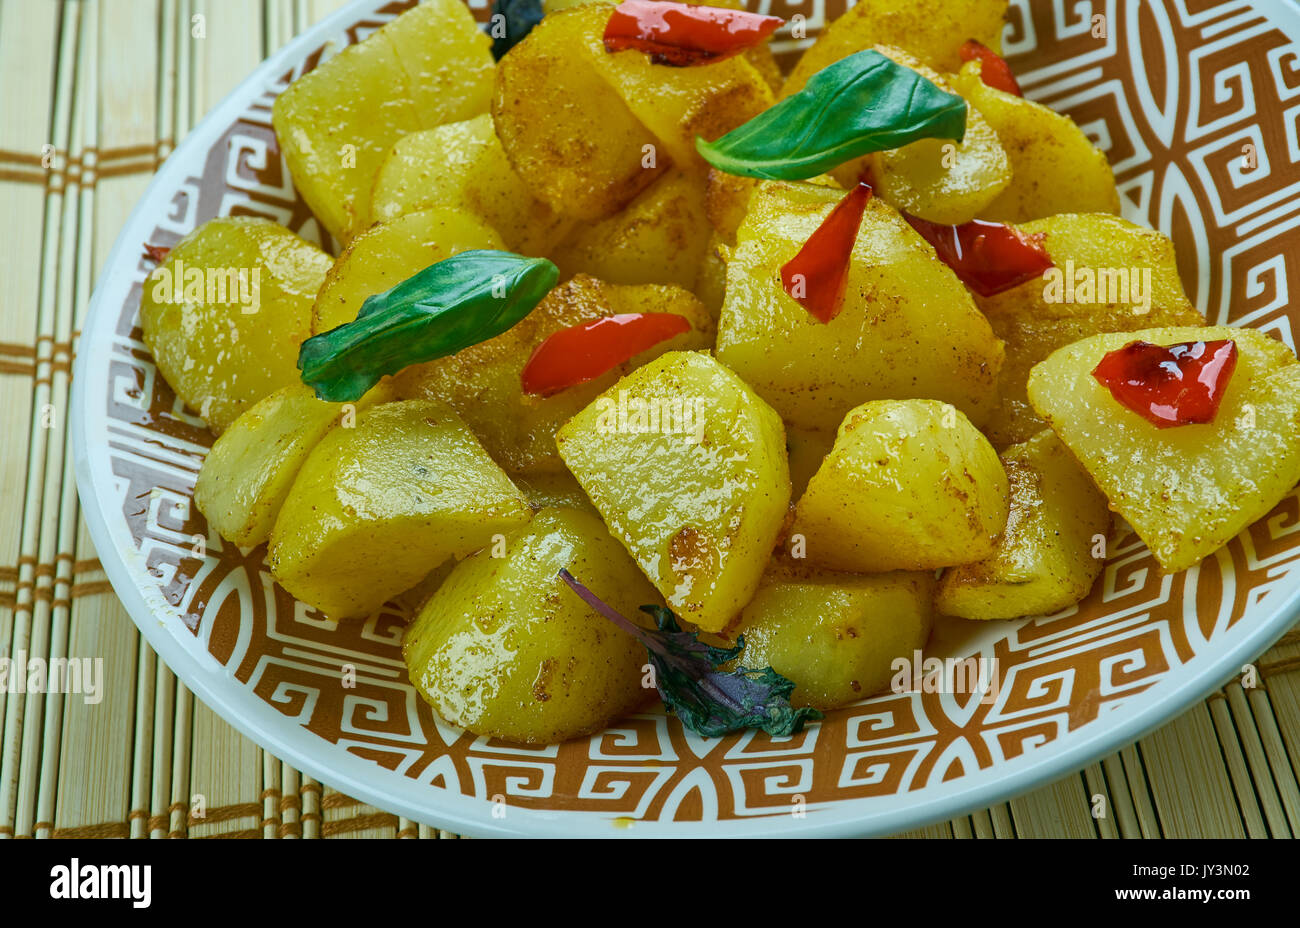 https://c8.alamy.com/comp/JY3N02/aloo-jerra-indian-dish-of-sauteed-boiled-potatoes-with-cumin-and-green-JY3N02.jpg